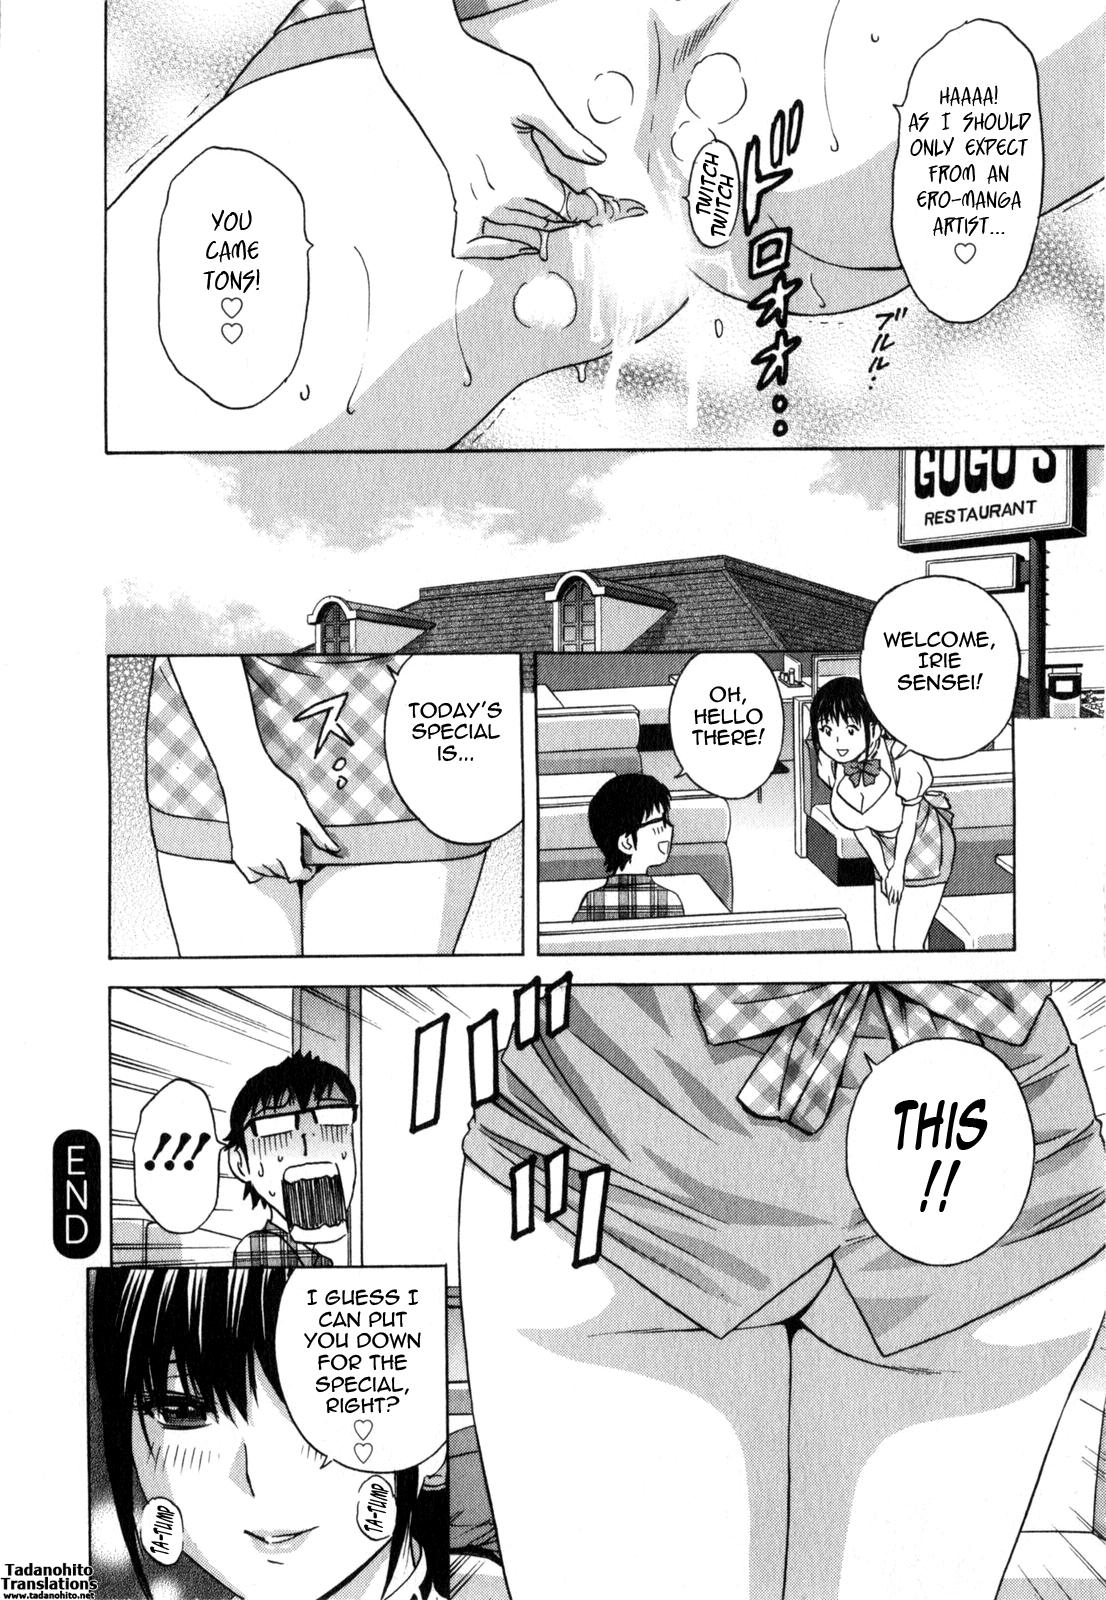 [Hidemaru] Life with Married Women Just Like a Manga 2 - Ch. 1-6 [English] {Tadanohito} 122